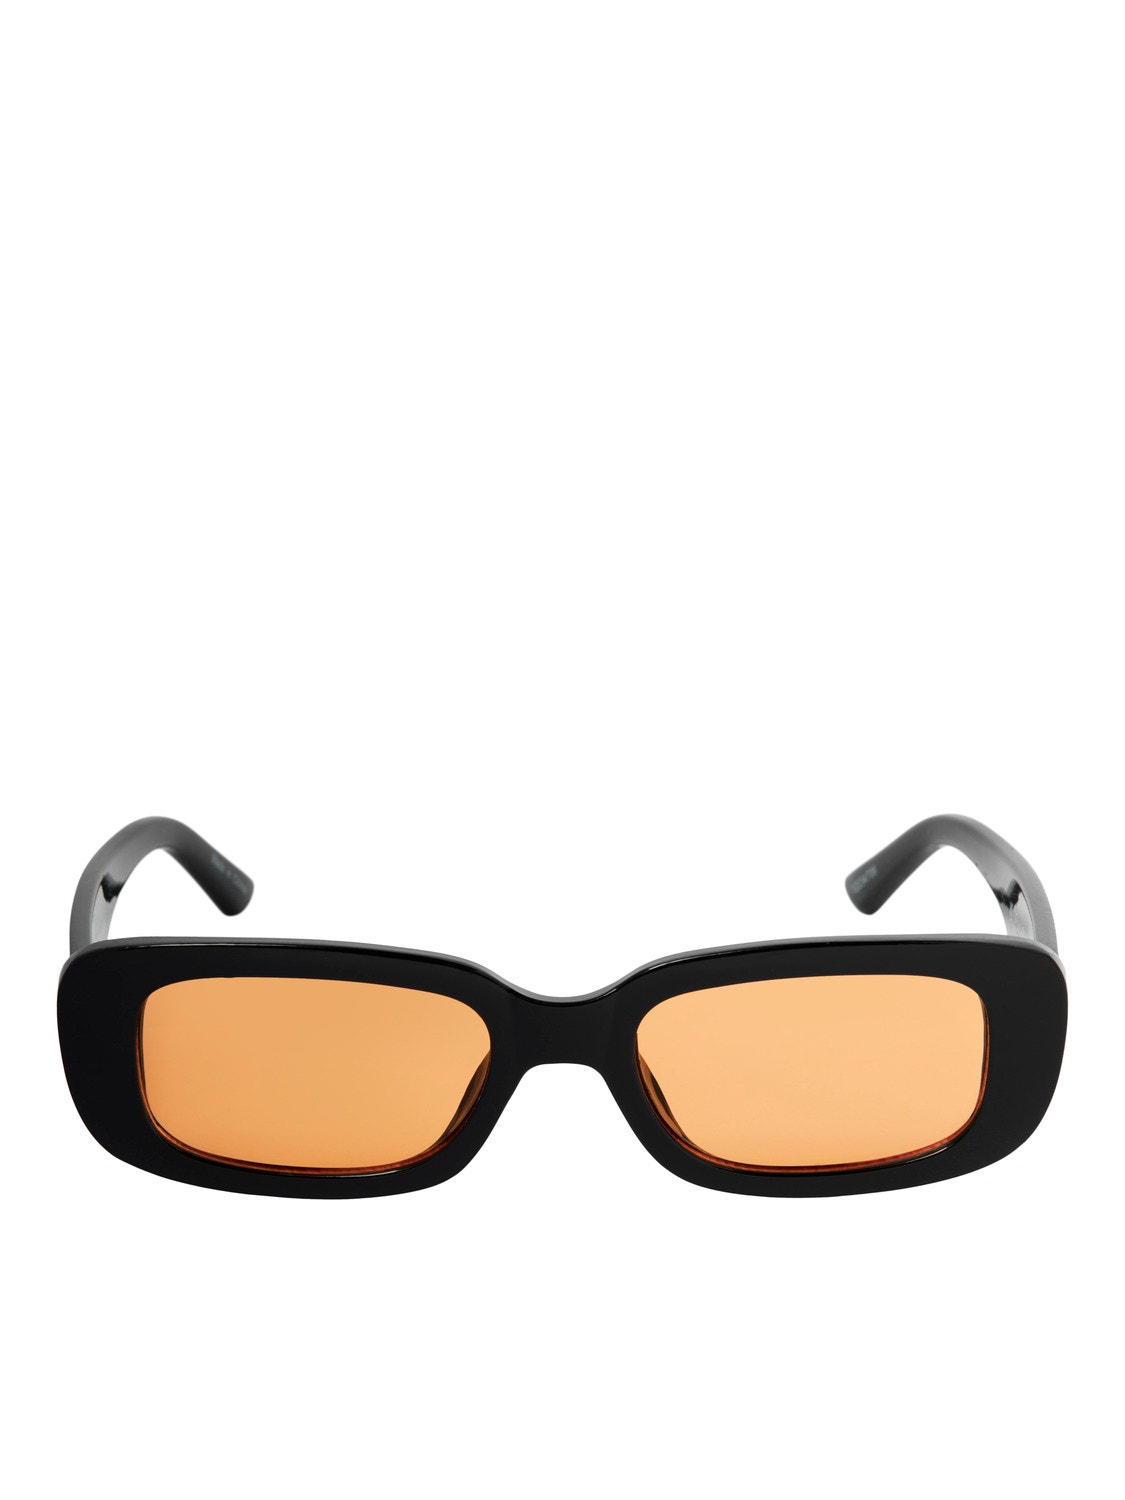 Jack & Jones Plastic Rectangular sunglasses -Black - 12234706